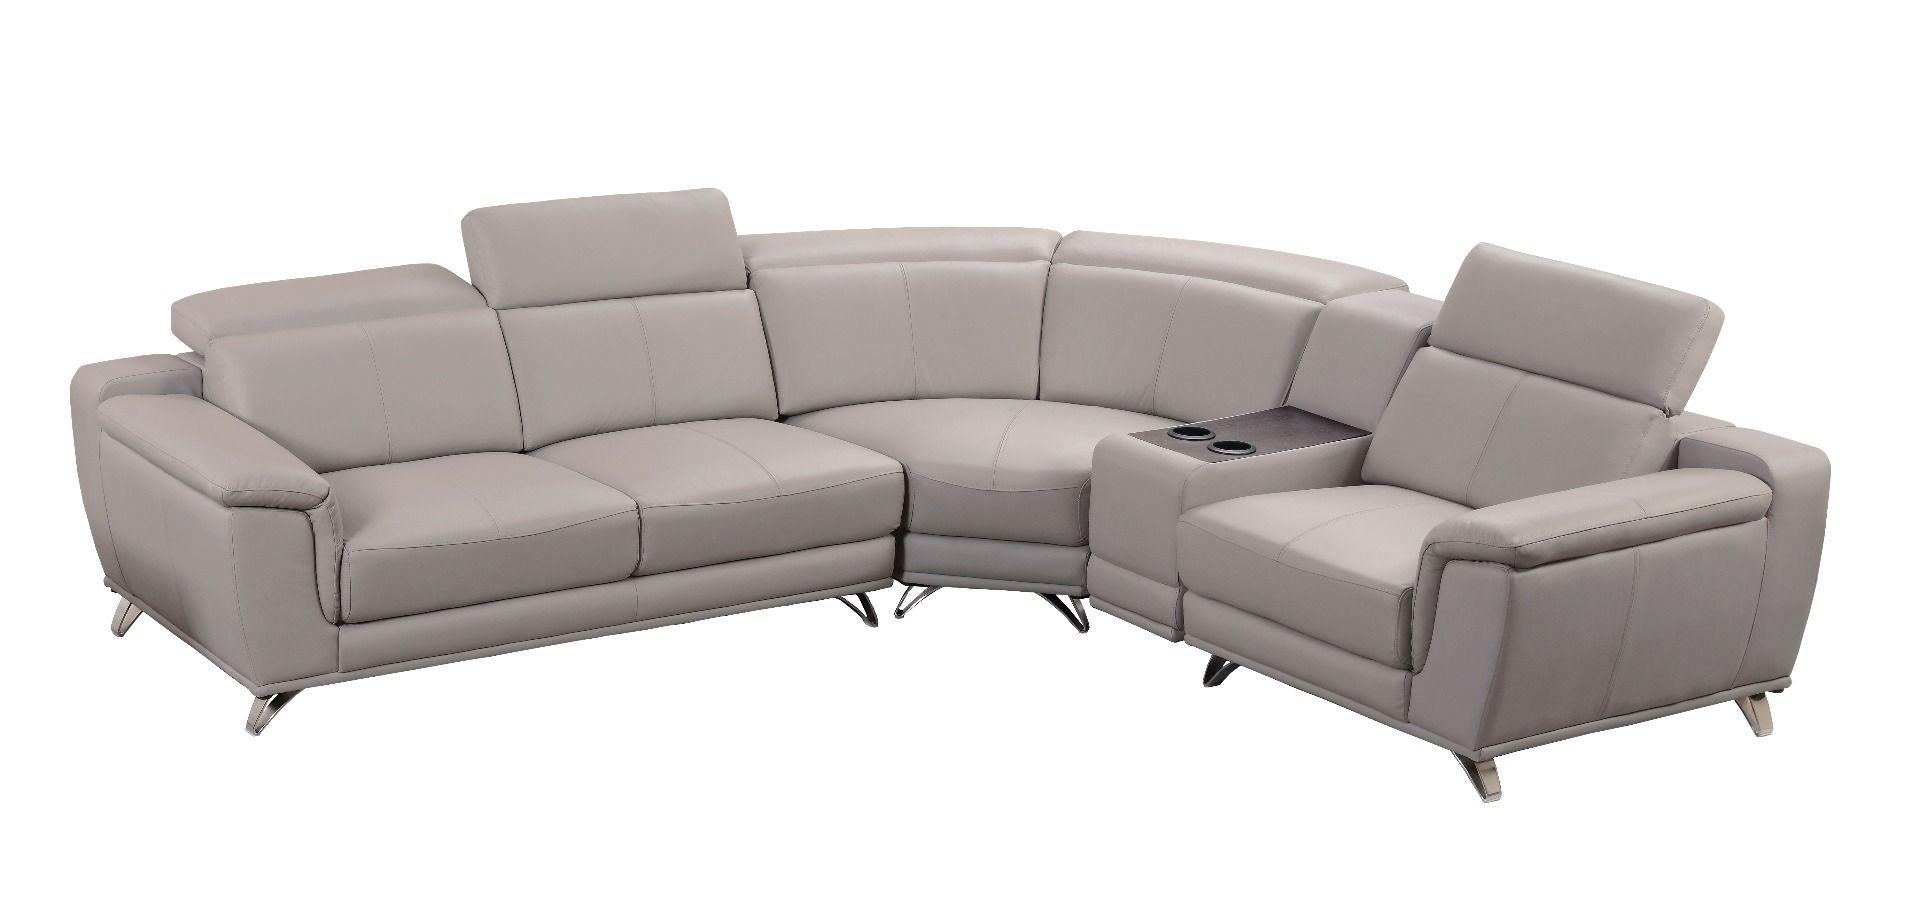 Contemporary Sectional Sofa EK-L535L-LG EK-L535L-LG in Light Gray Leather